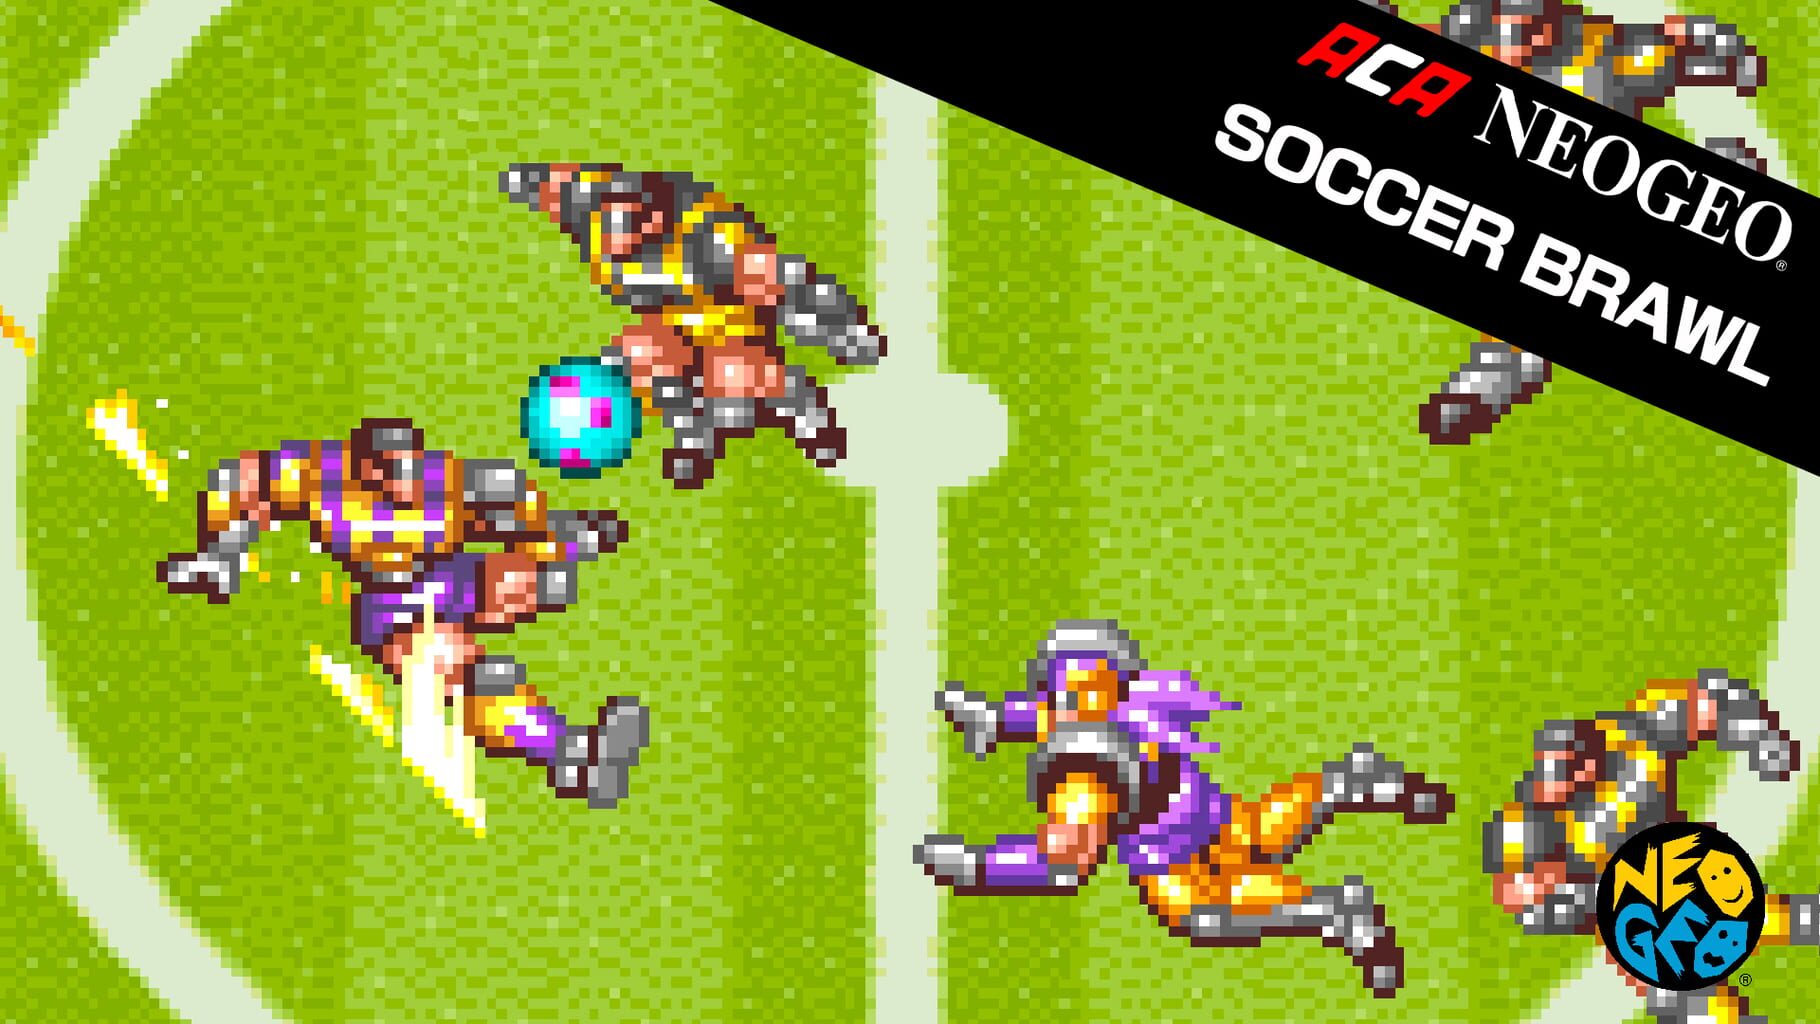 ACA Neo Geo: Soccer Brawl artwork